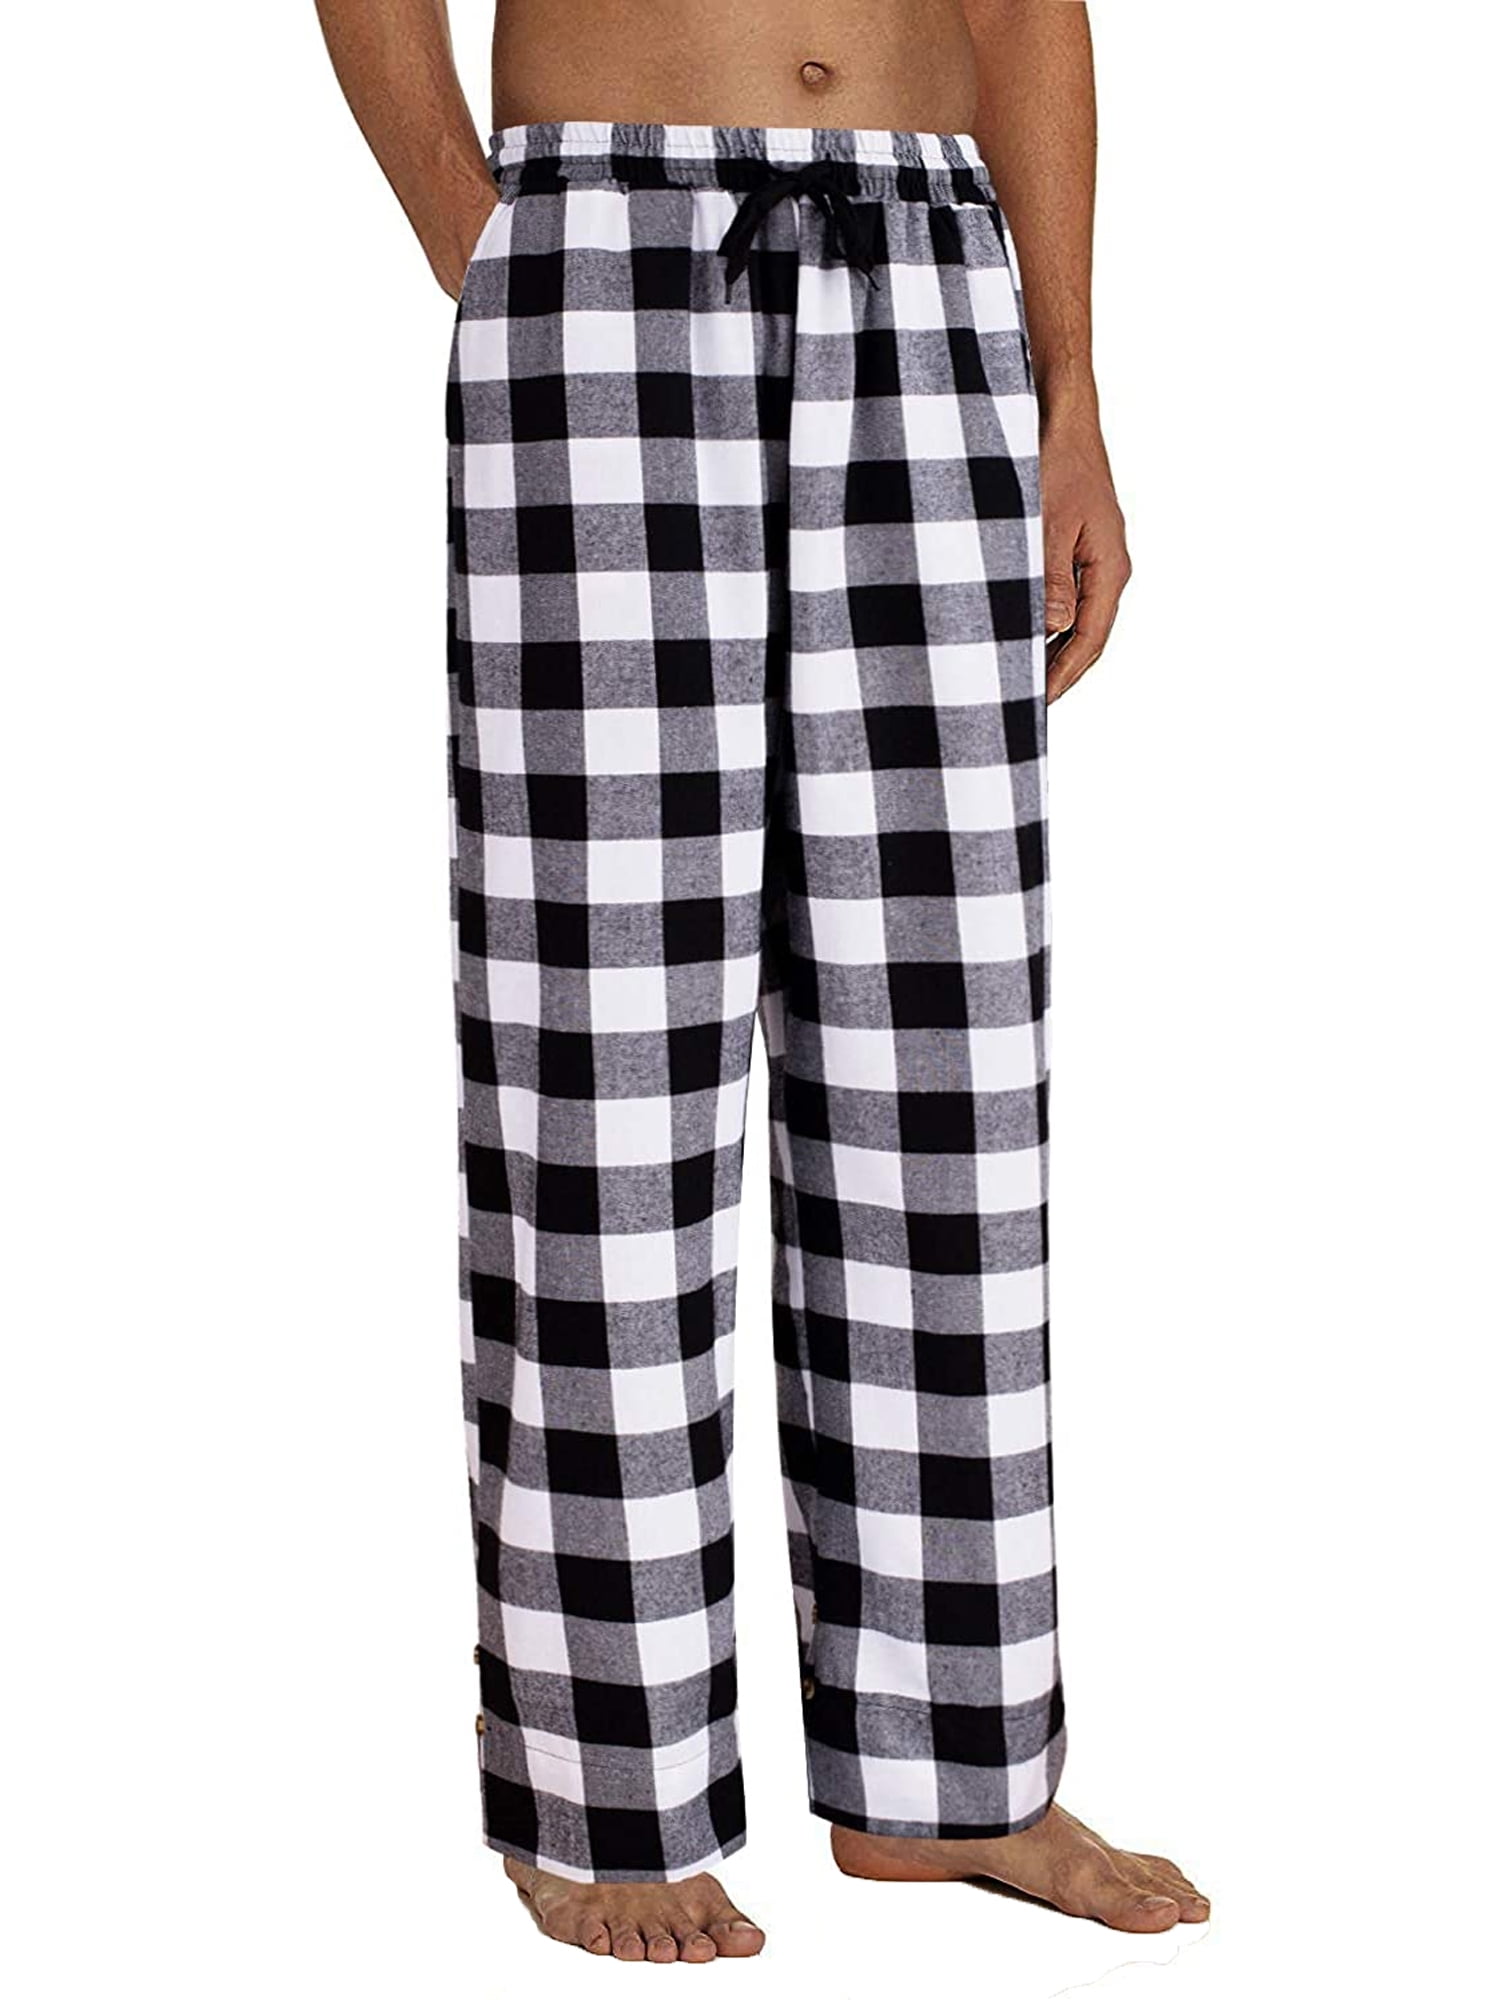 Men Pyjamas Lounge Pants Loose Cotton Trousers Elastic Waist Nightwear Bottoms 